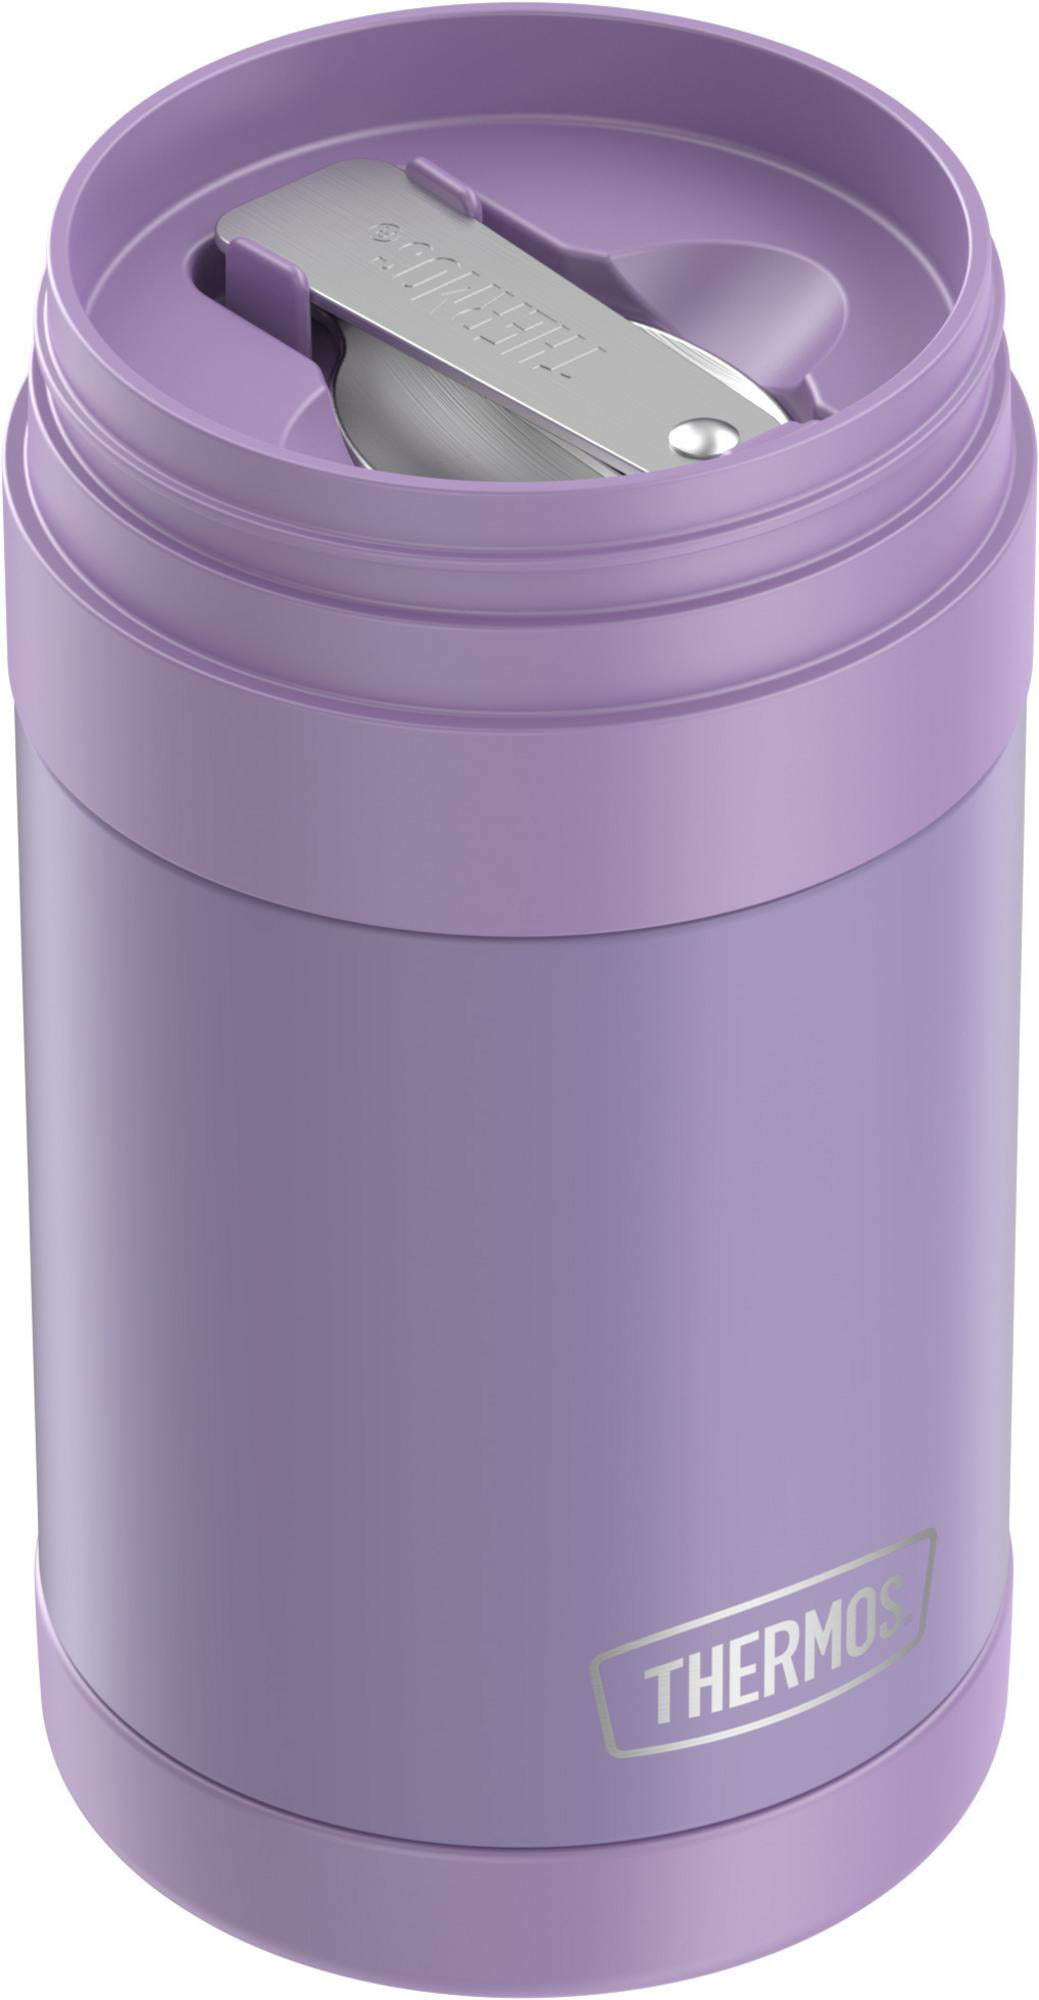 Thermos 30379550 16 oz Funtainer Bottle, Lavender, 1 - Kroger